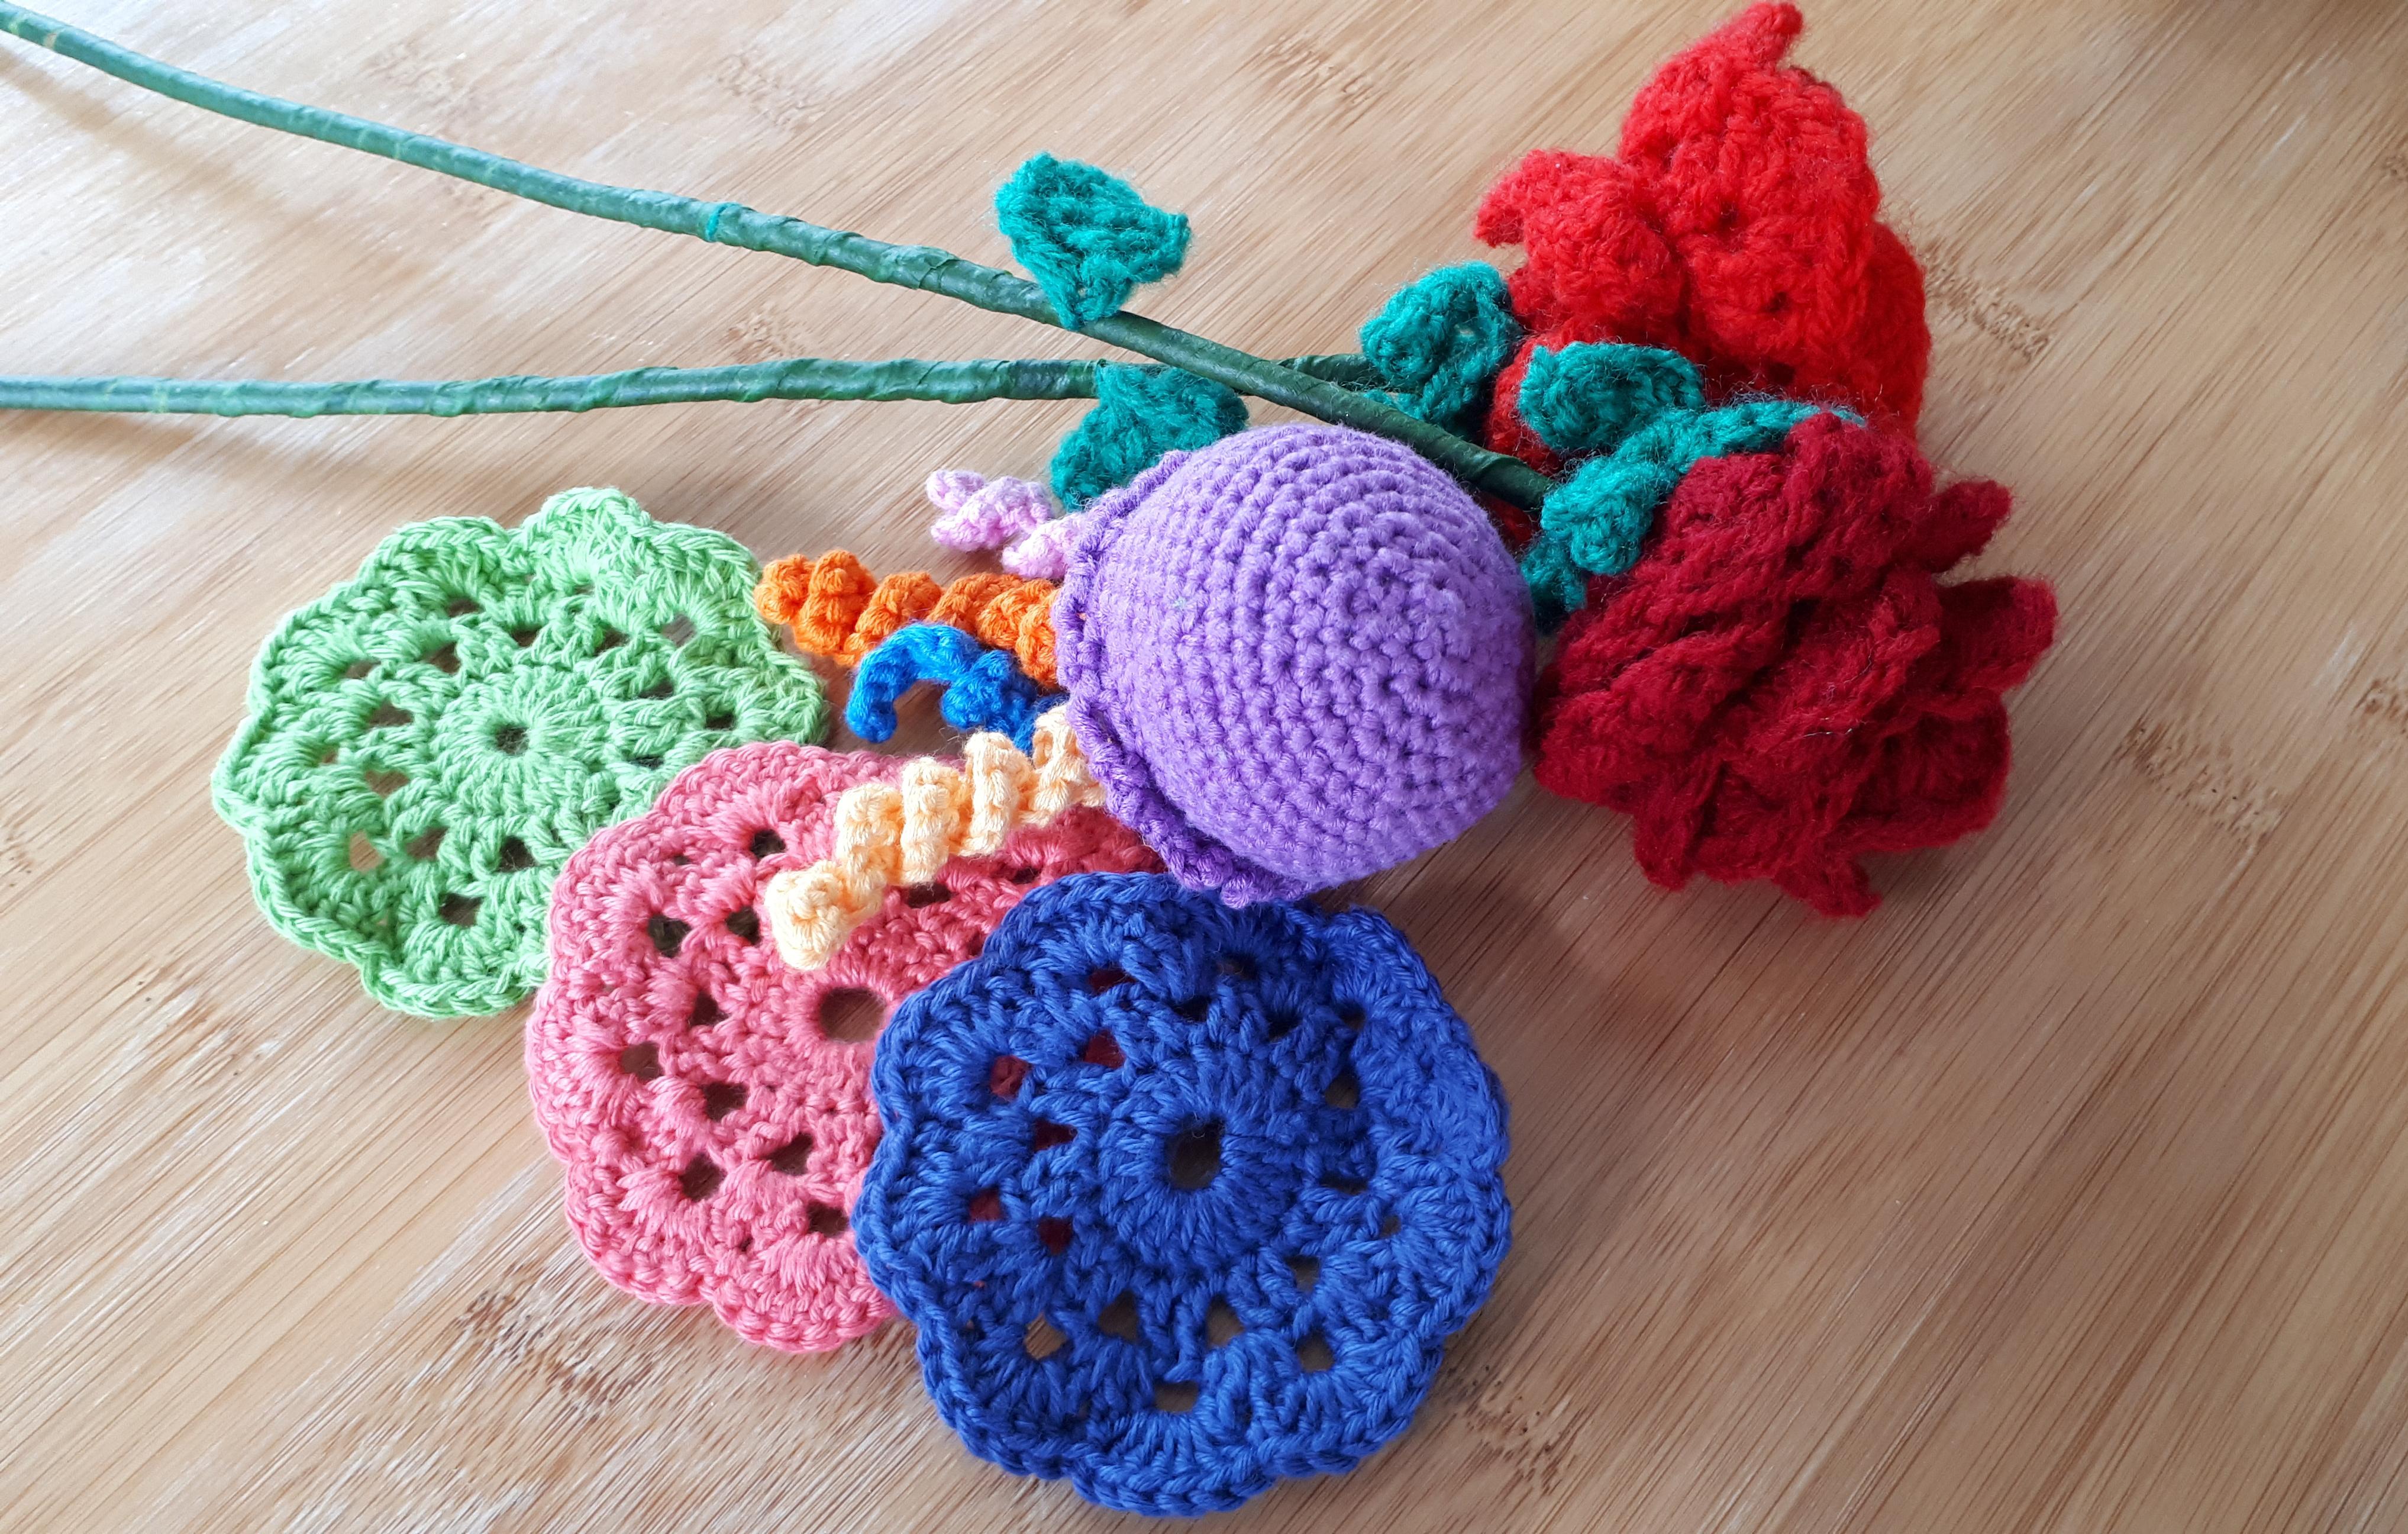 Crochet Donor Reward Samples